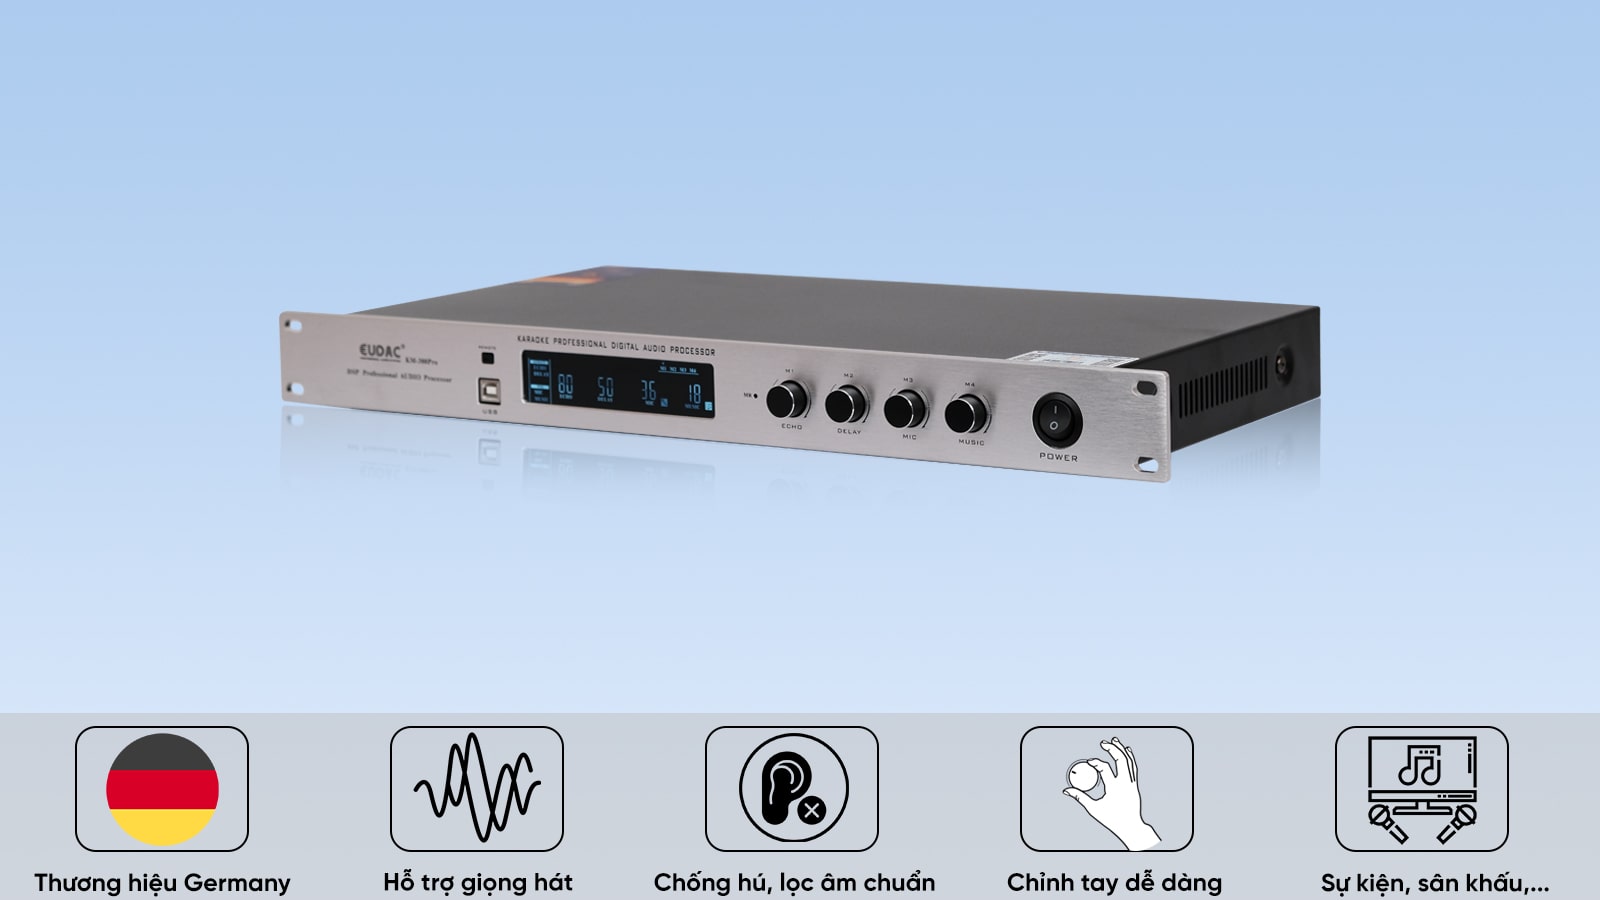 Vang Số Eudac Audio KM-300 Pro